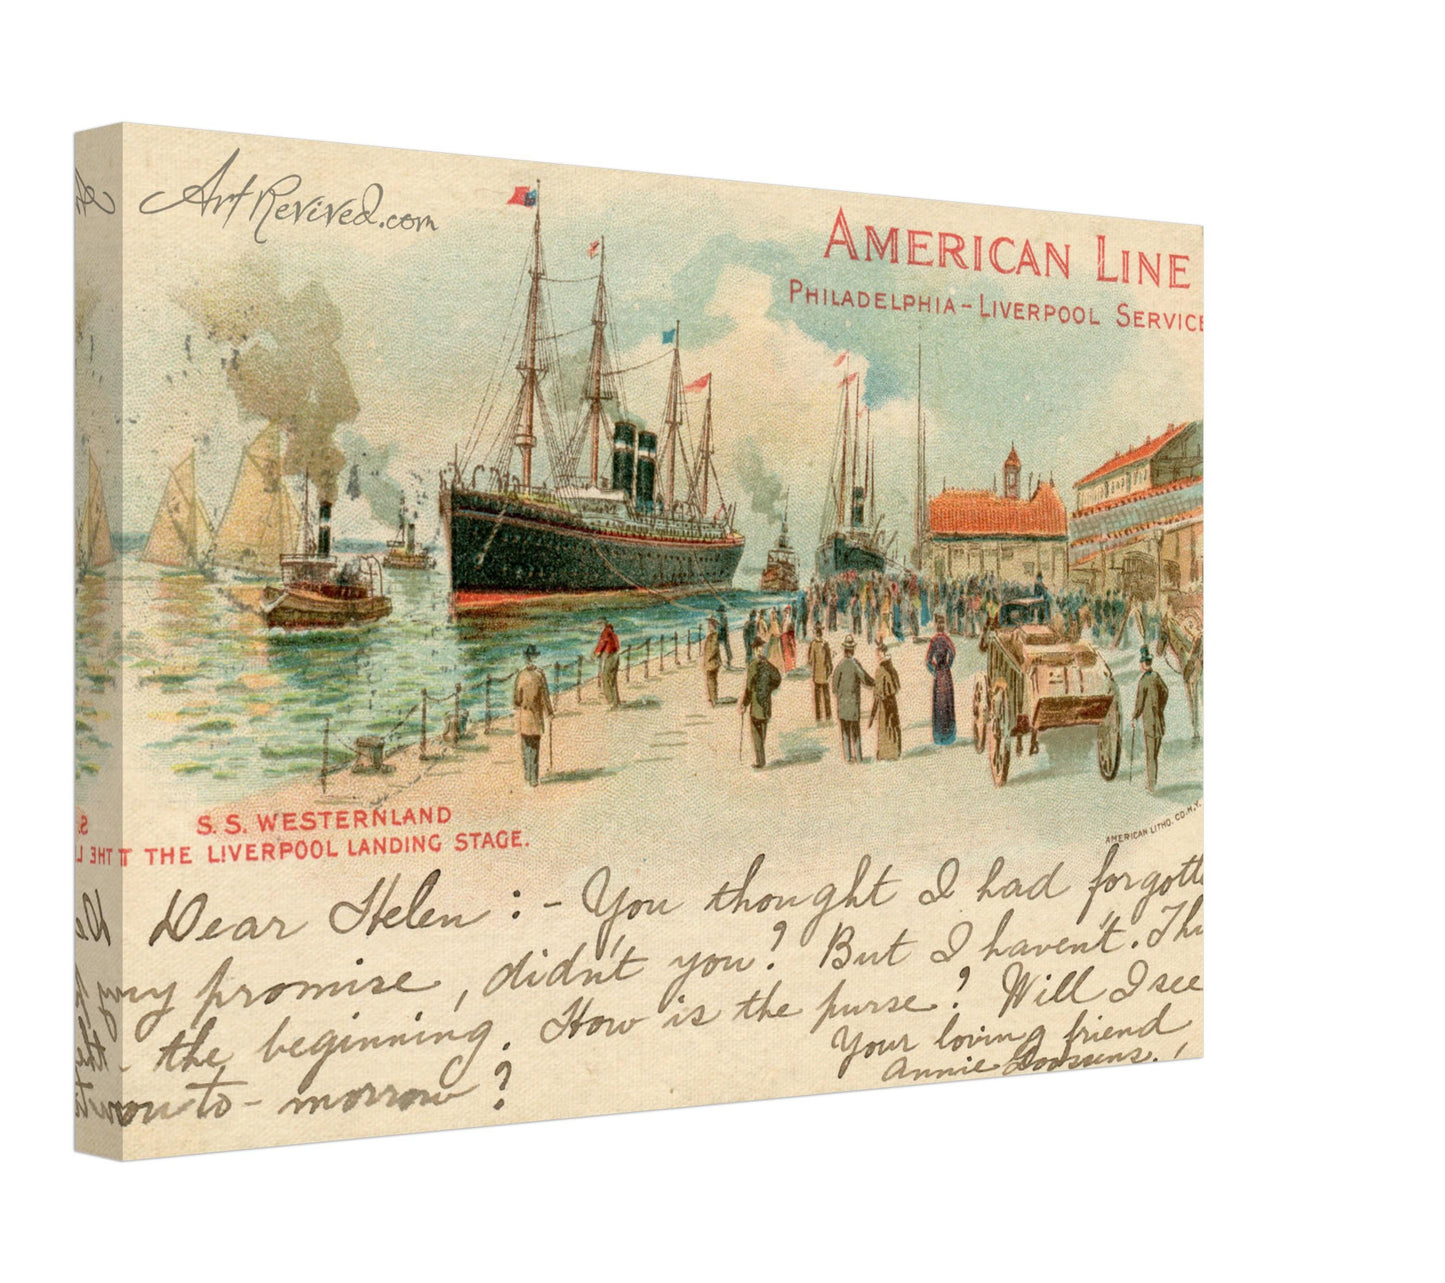 American Line "SS Westernland"